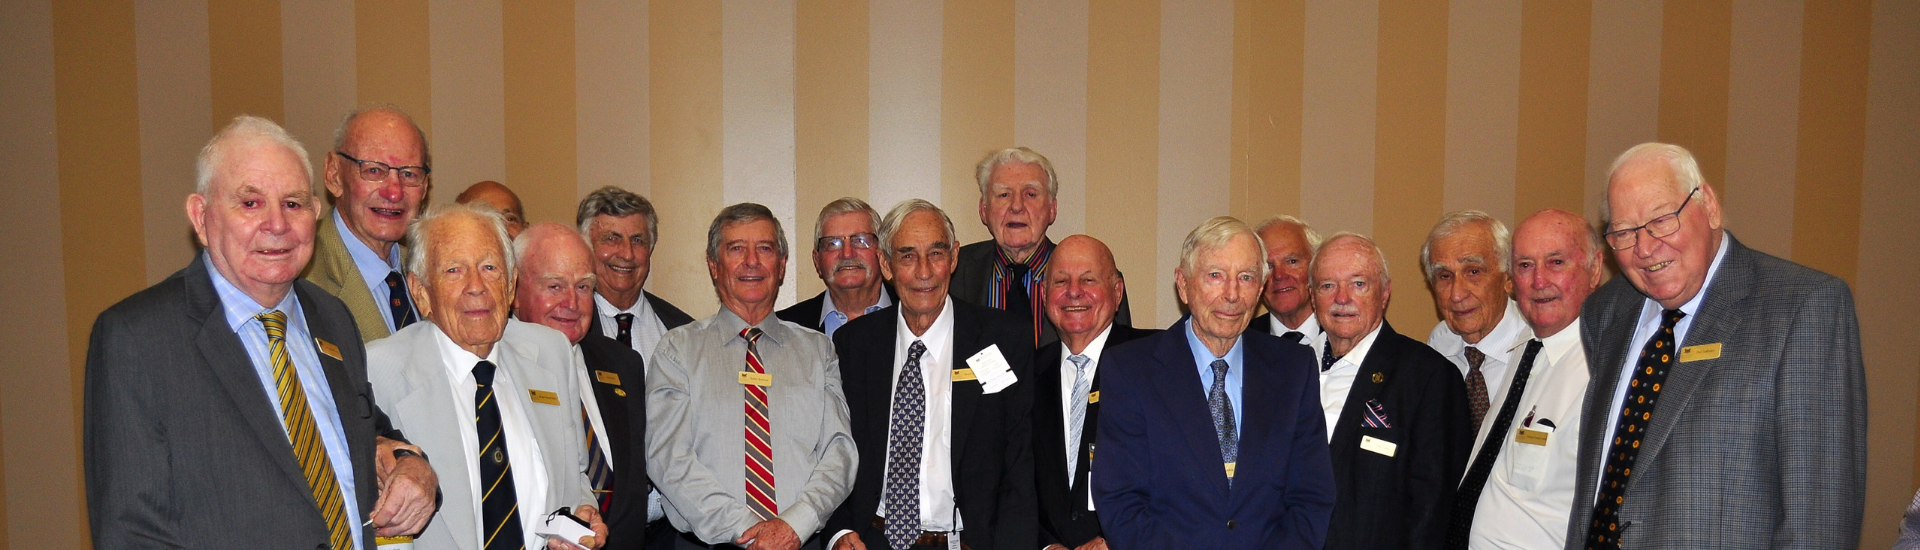 50 Year Service Member Event | Brisbane Racing Club 